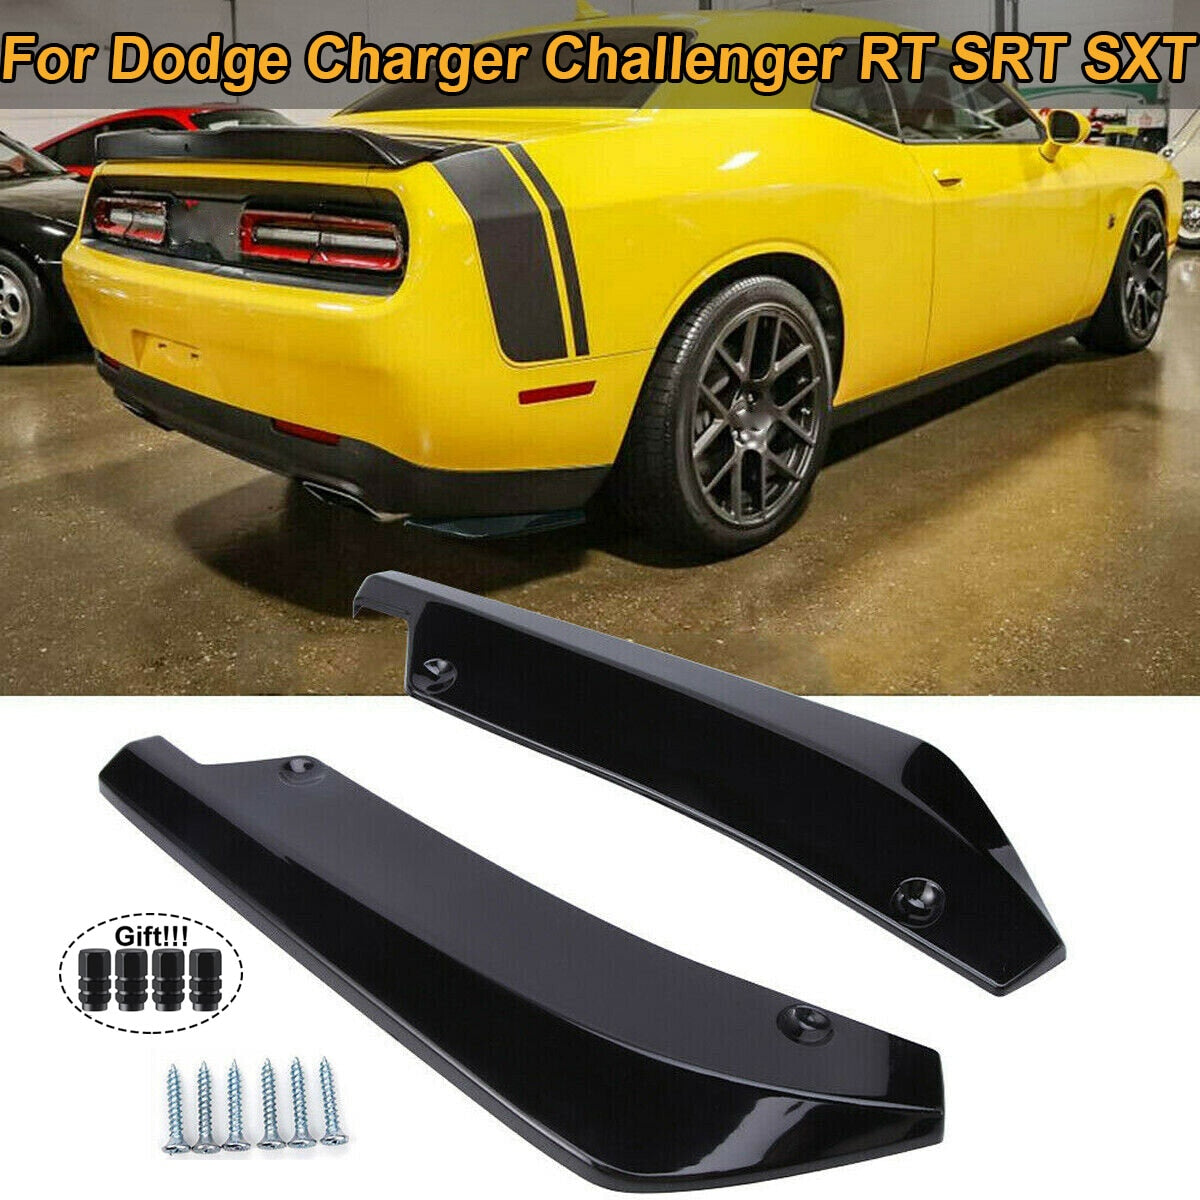 Star Cars Rear Bumper Diffuser Canards For Dodge Charger Challenger RT SRT SXT